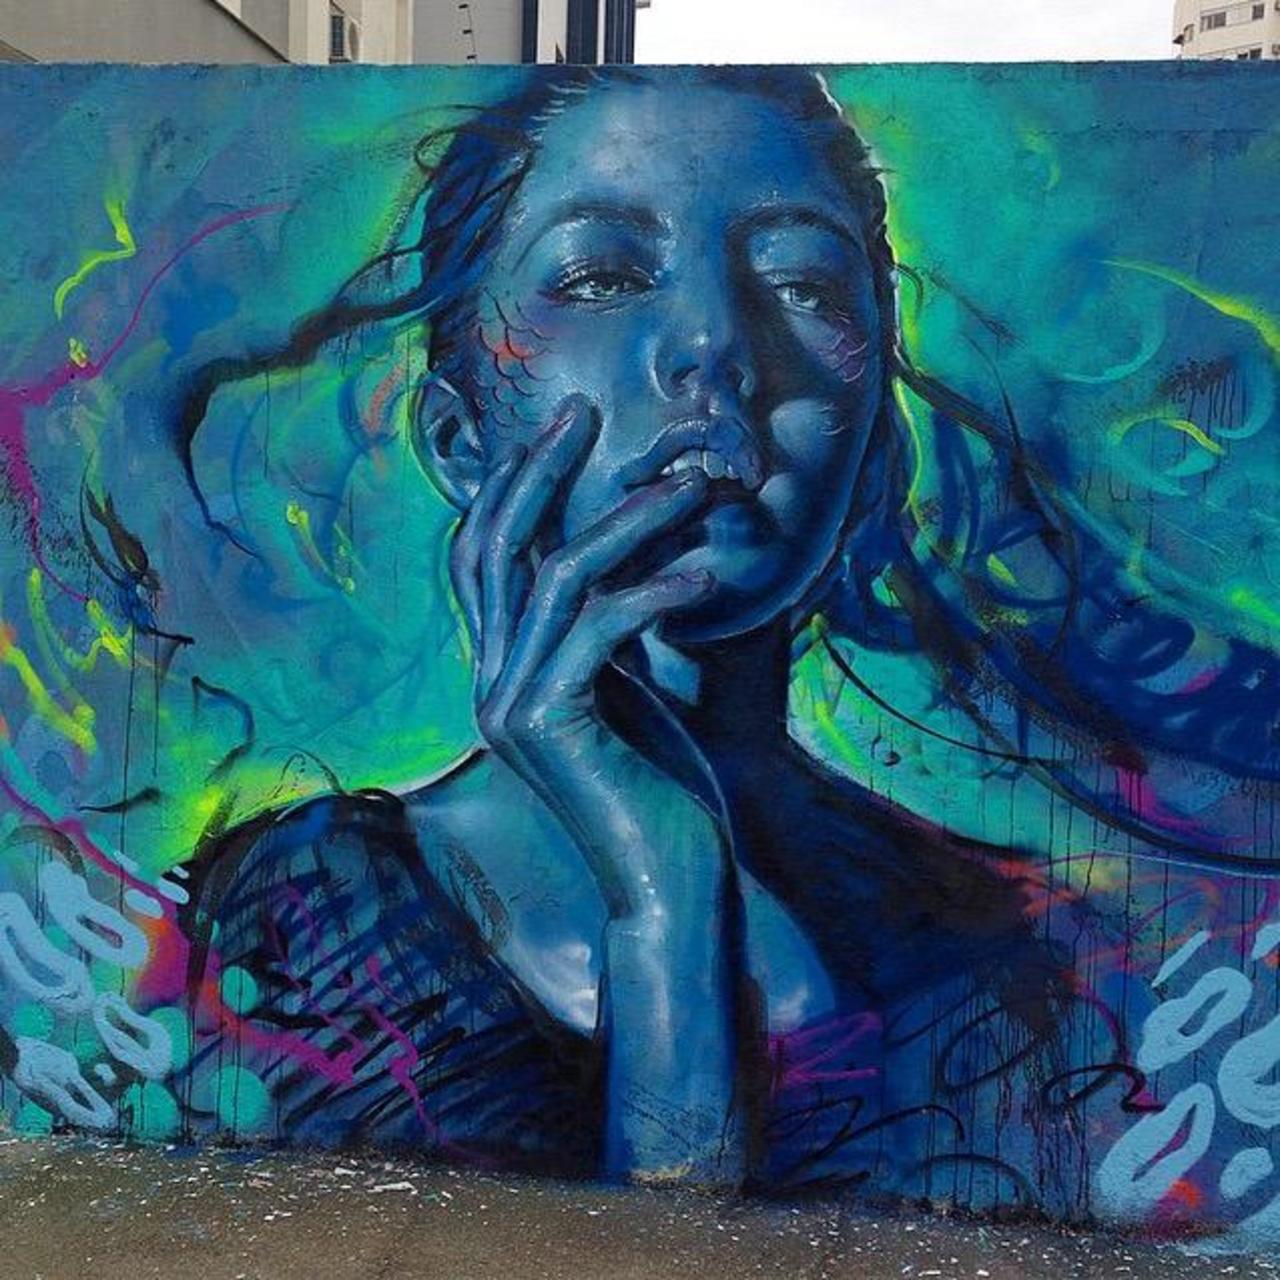 Thiago Valdi new Street Art piece titled 'Day Dreamer'

#art #mural #graffiti #streetart http://t.co/9AWTJJTZ5u